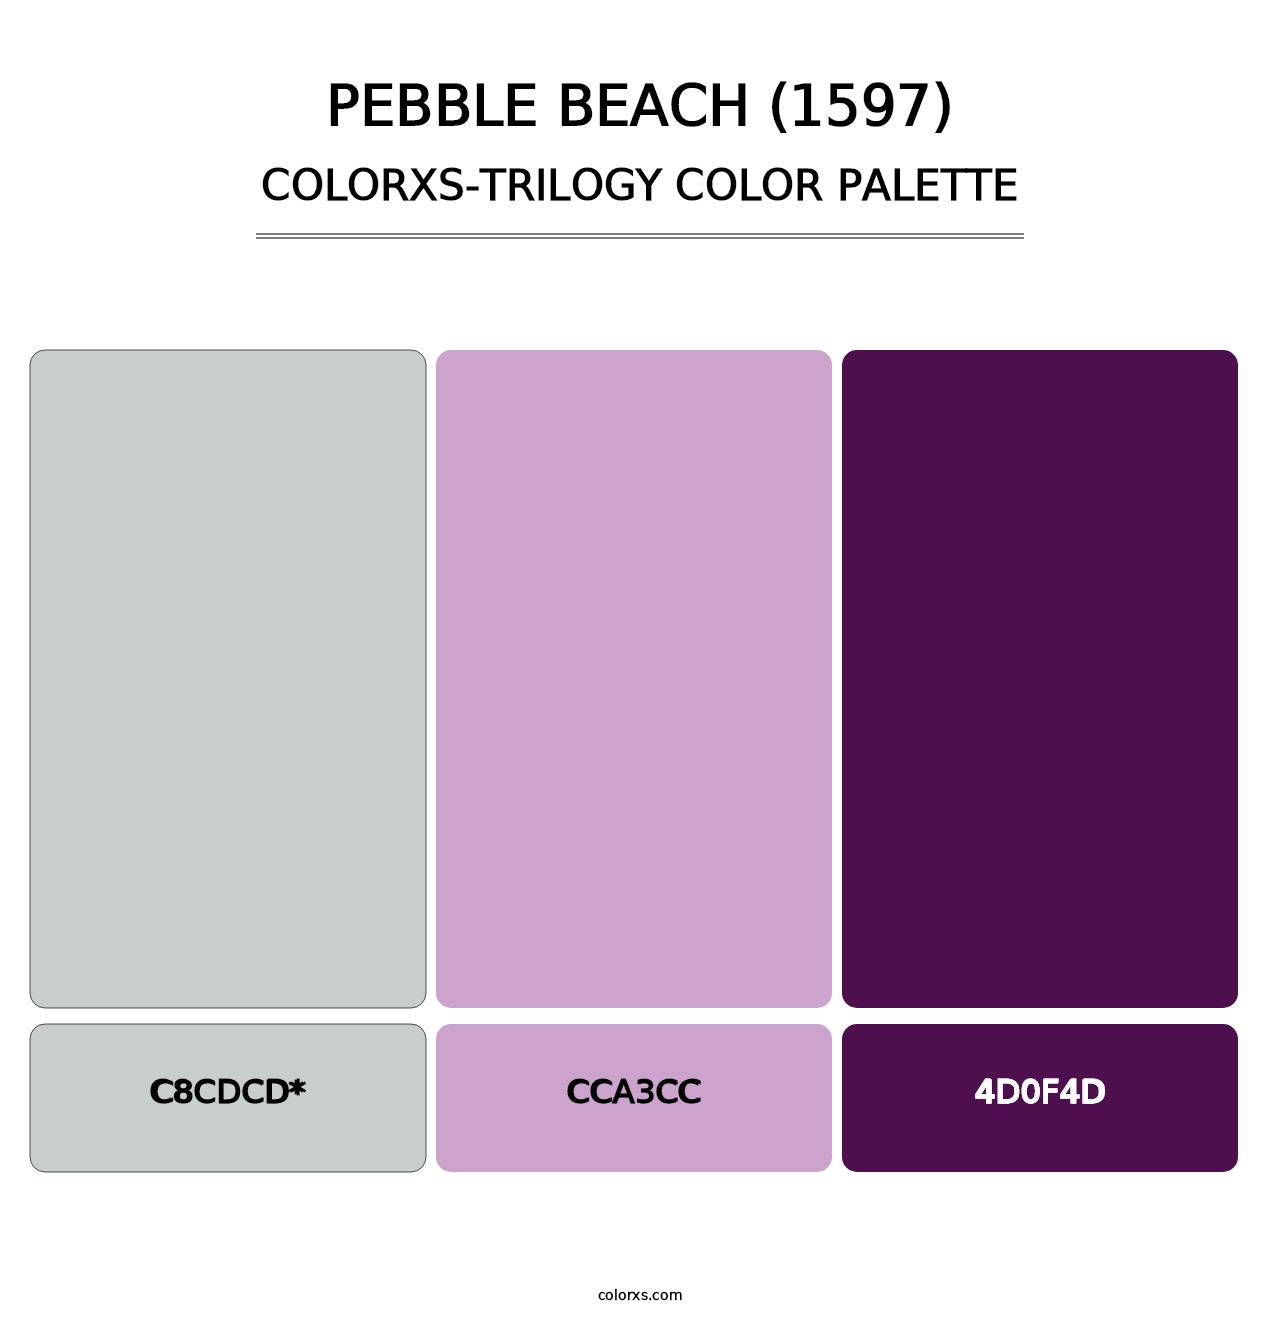 Pebble Beach (1597) - Colorxs Trilogy Palette